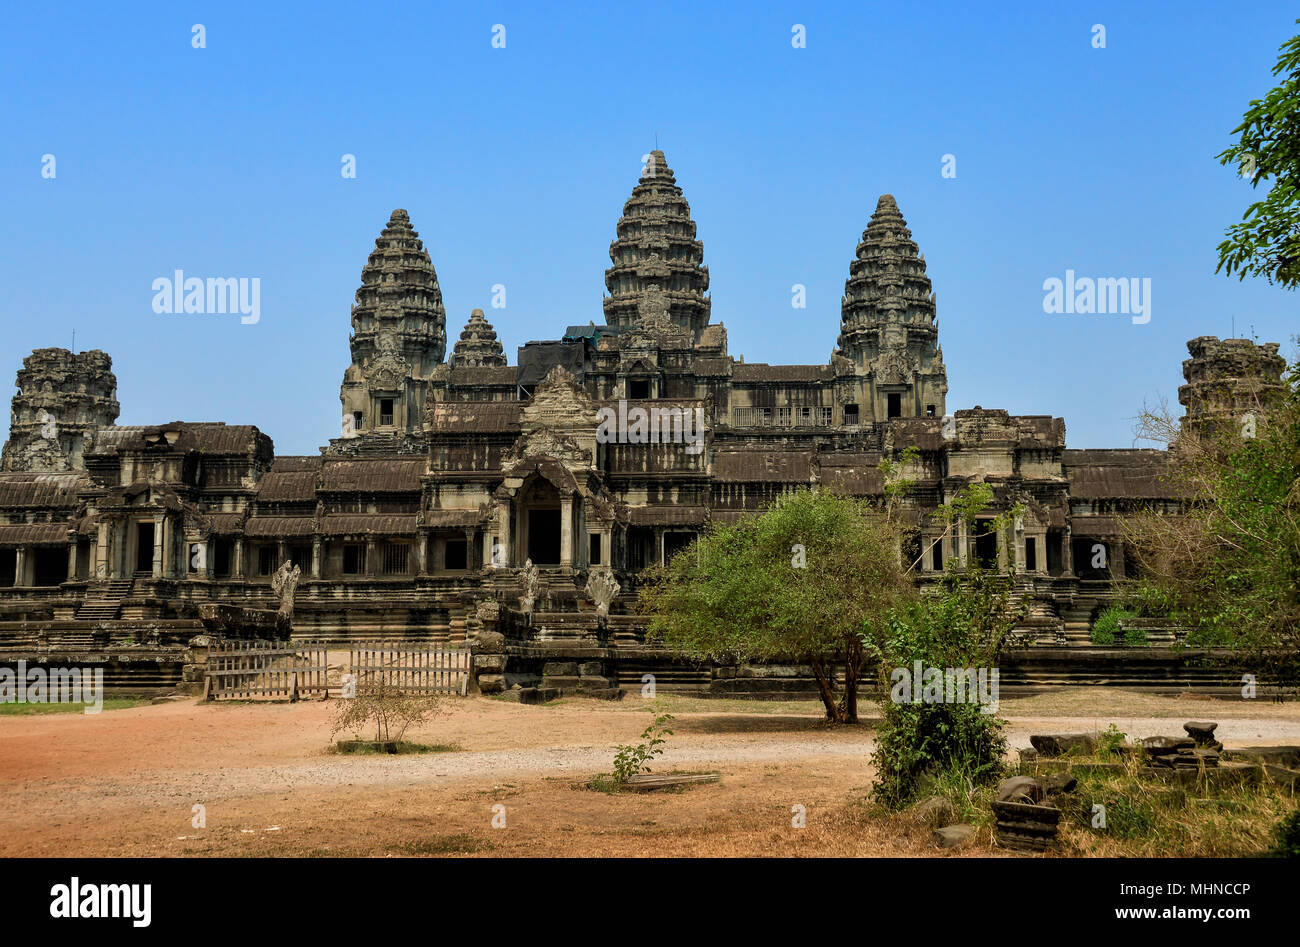 Complexe du Temple d'Angkor Wat, au Cambodge Banque D'Images